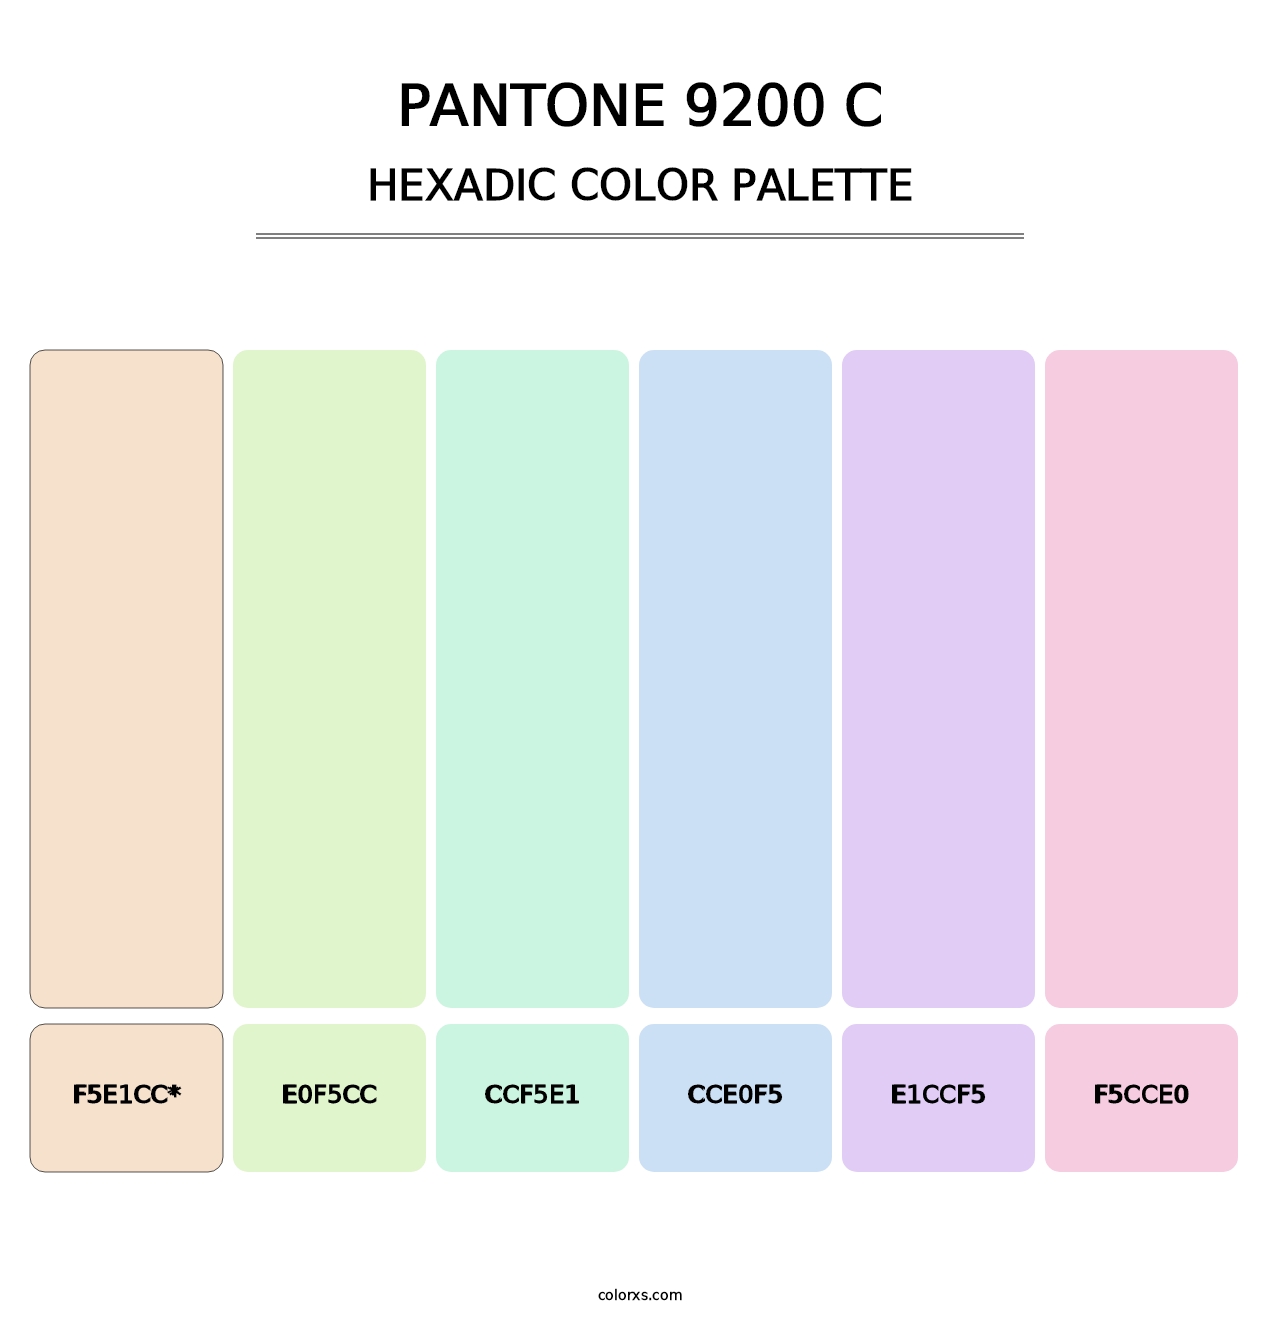 PANTONE 9200 C - Hexadic Color Palette